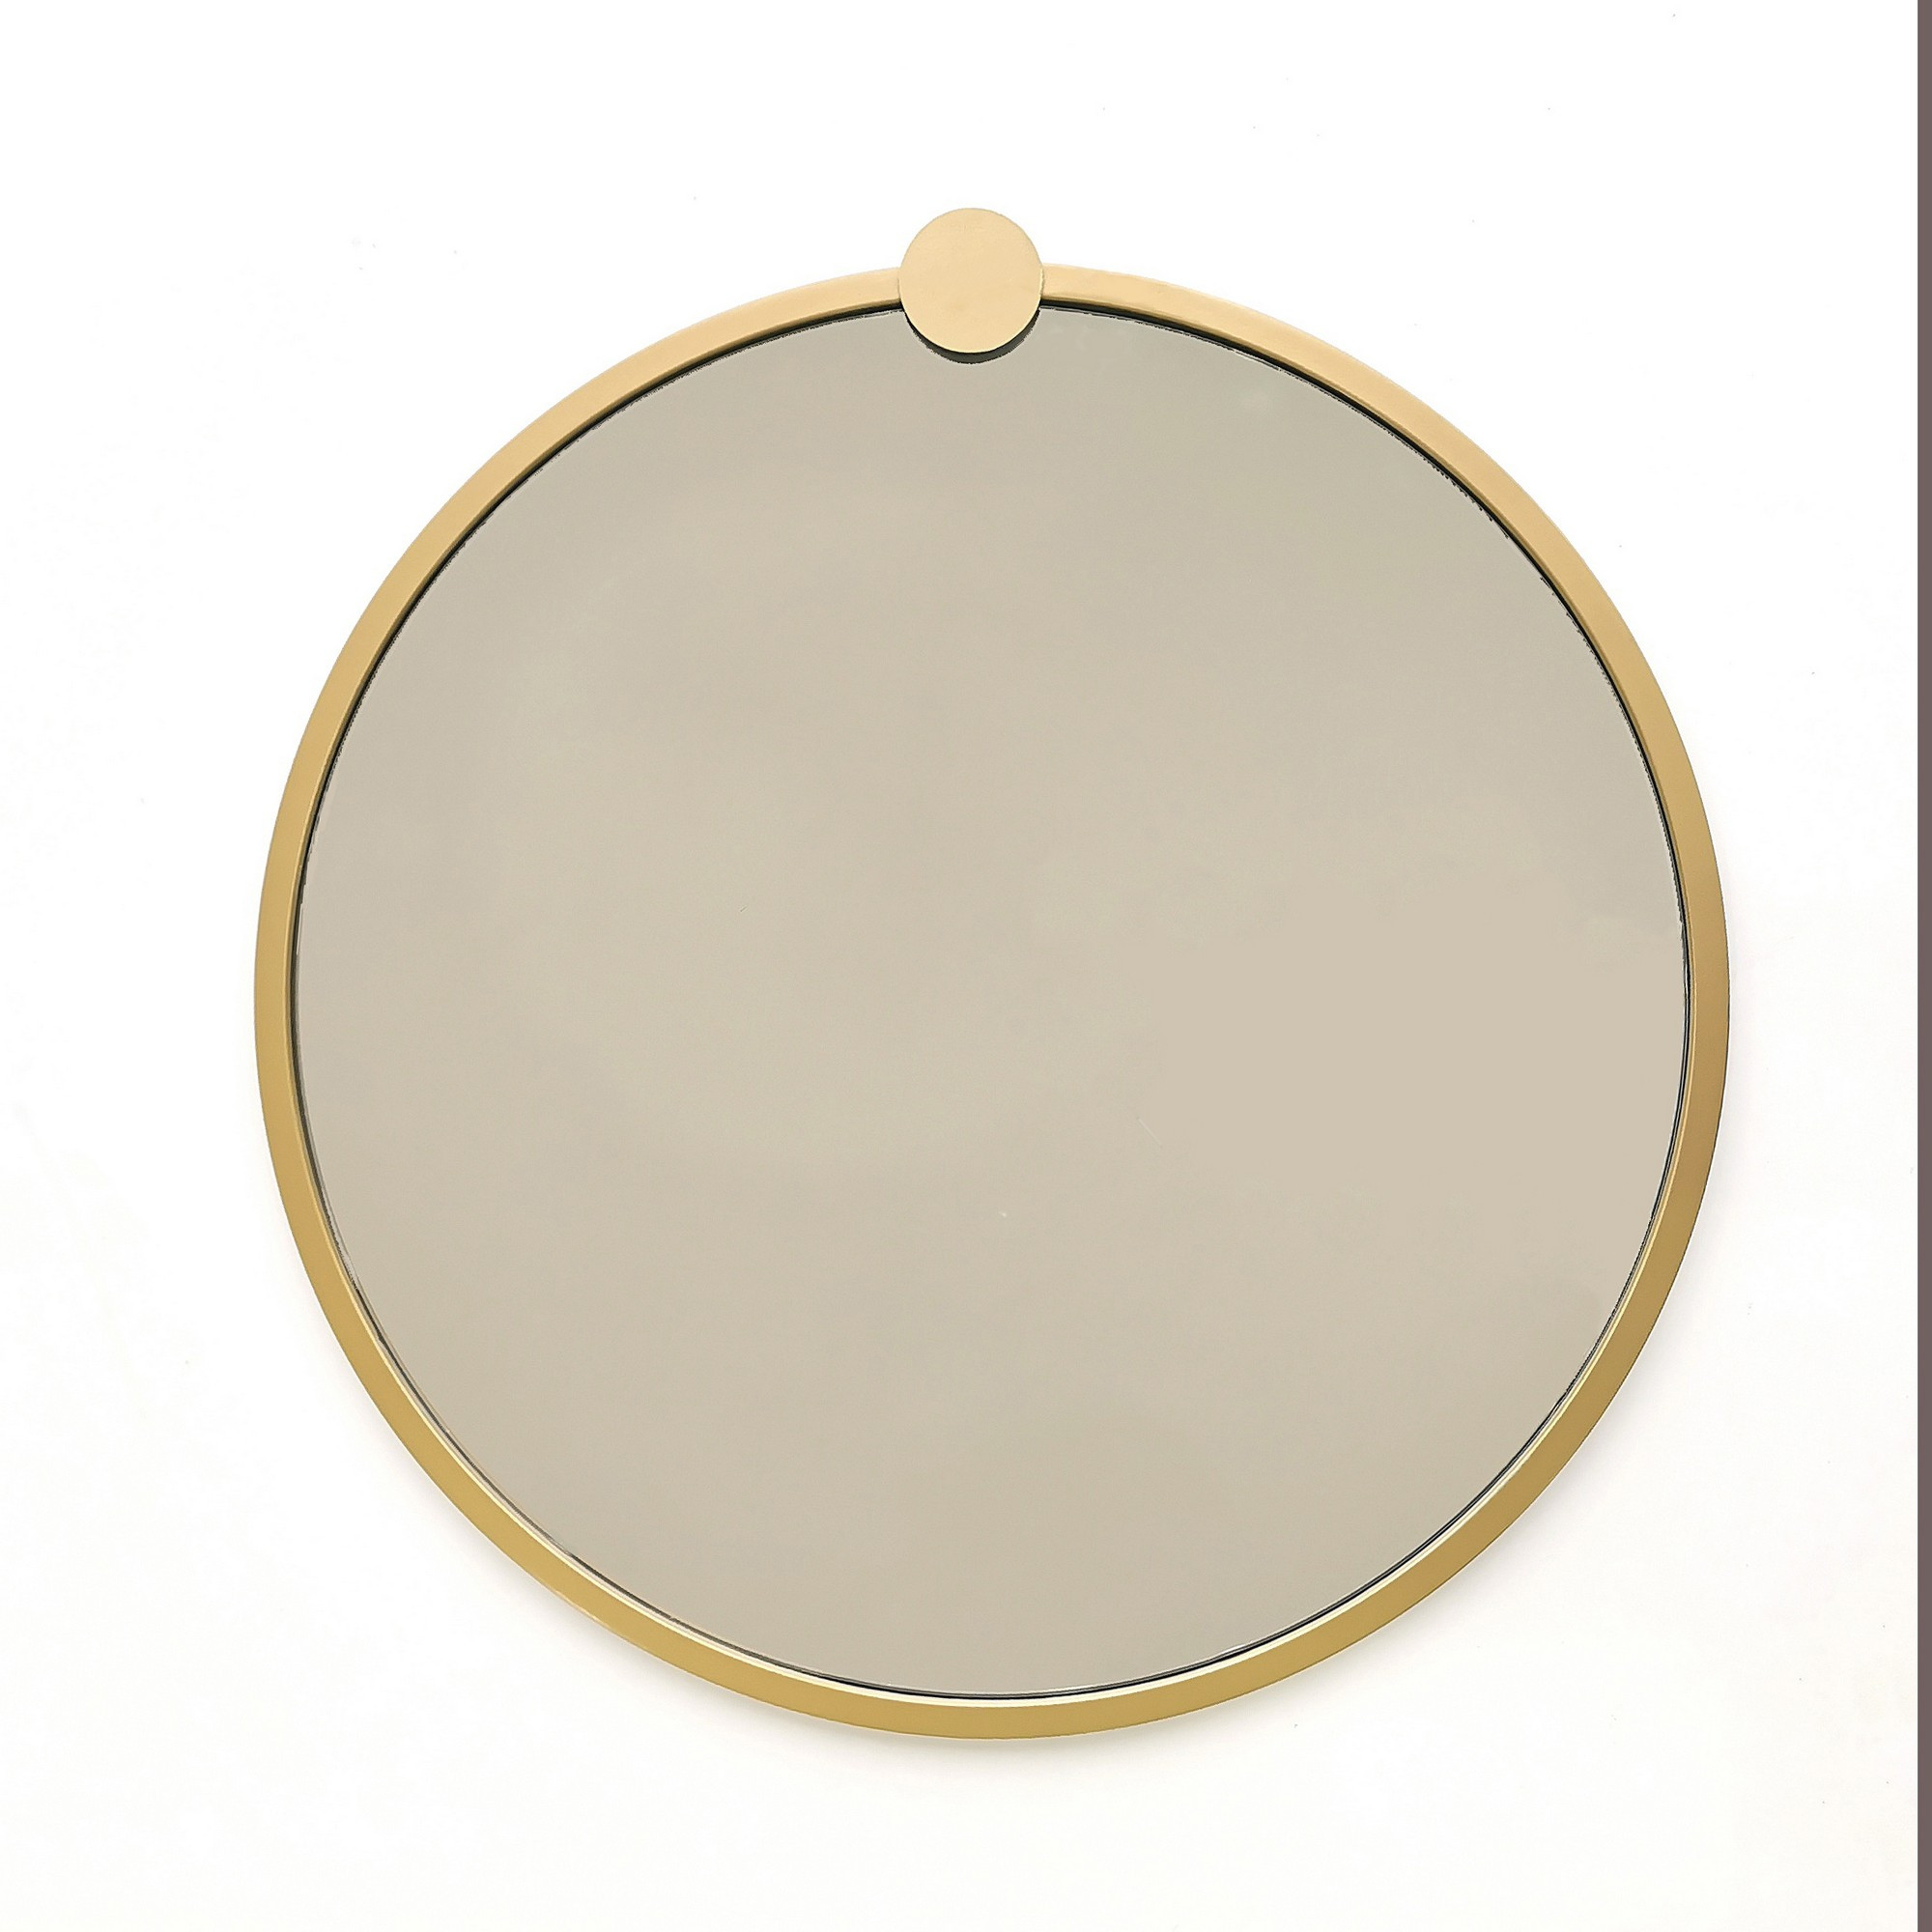 NORDVÄRK Gold vægspejl, rund - spejlglas og guld metal (Ø60)